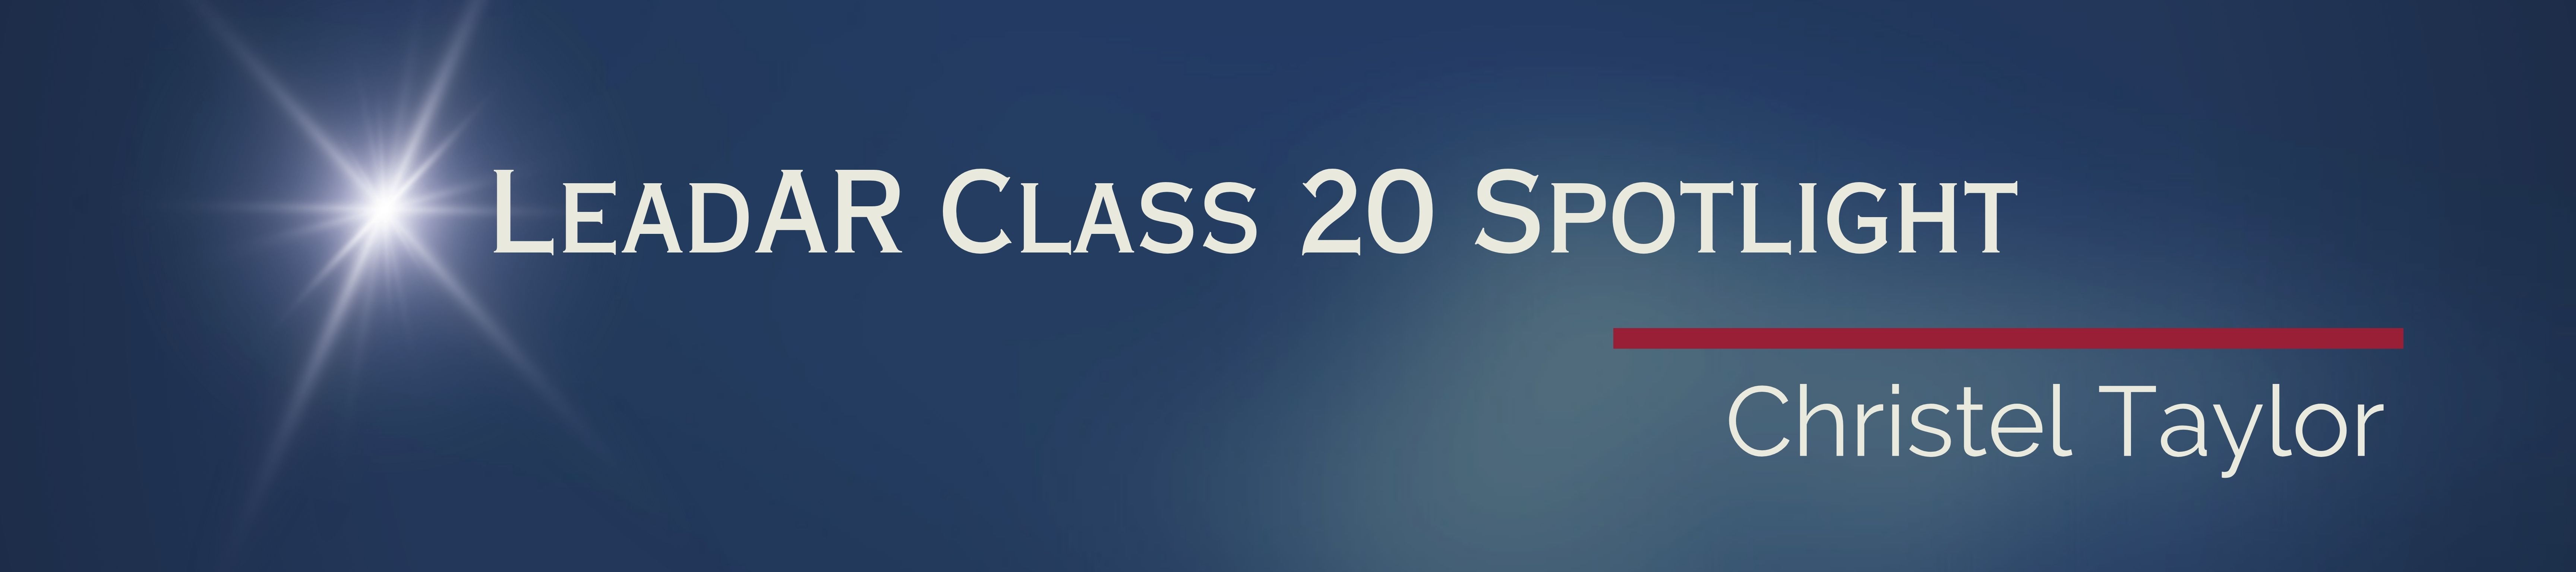 LeadAR Class 20 Spotlight-Christel Taylor